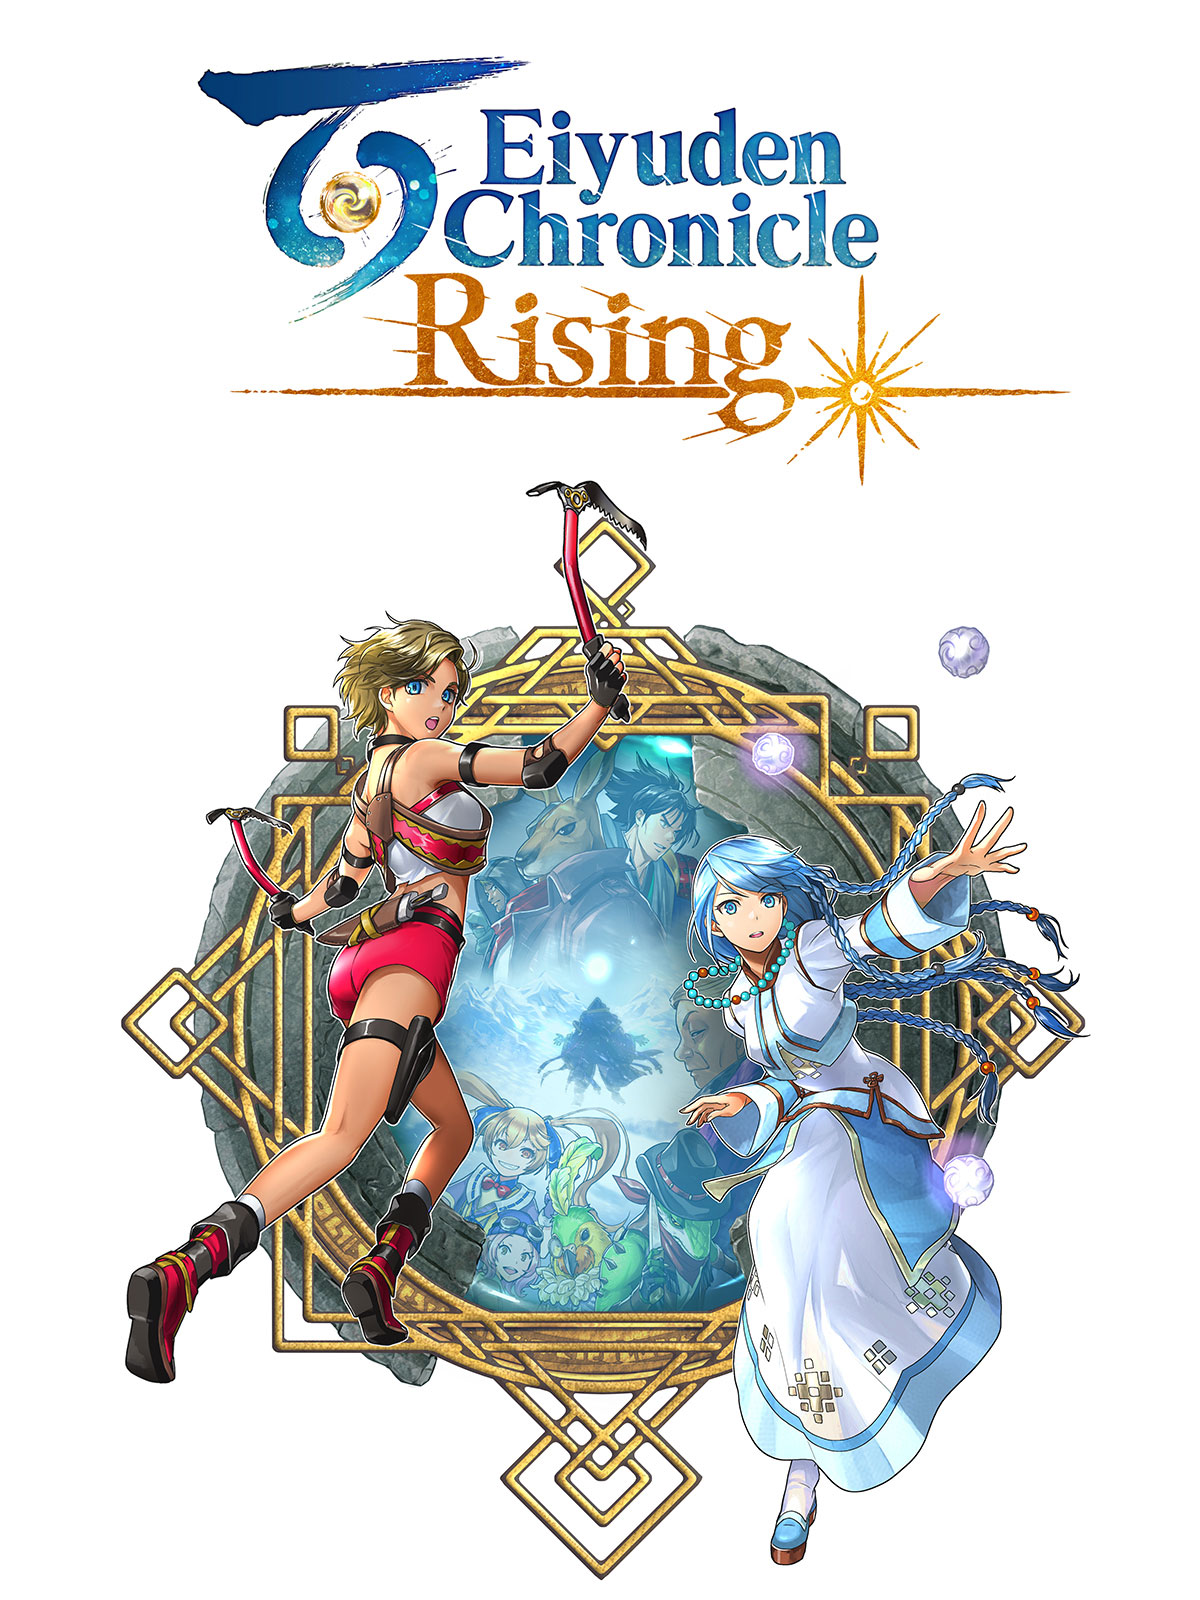 Eiyuden Chronicle: Rising [PC, Цифровая версия] (Цифровая версия) цена и фото